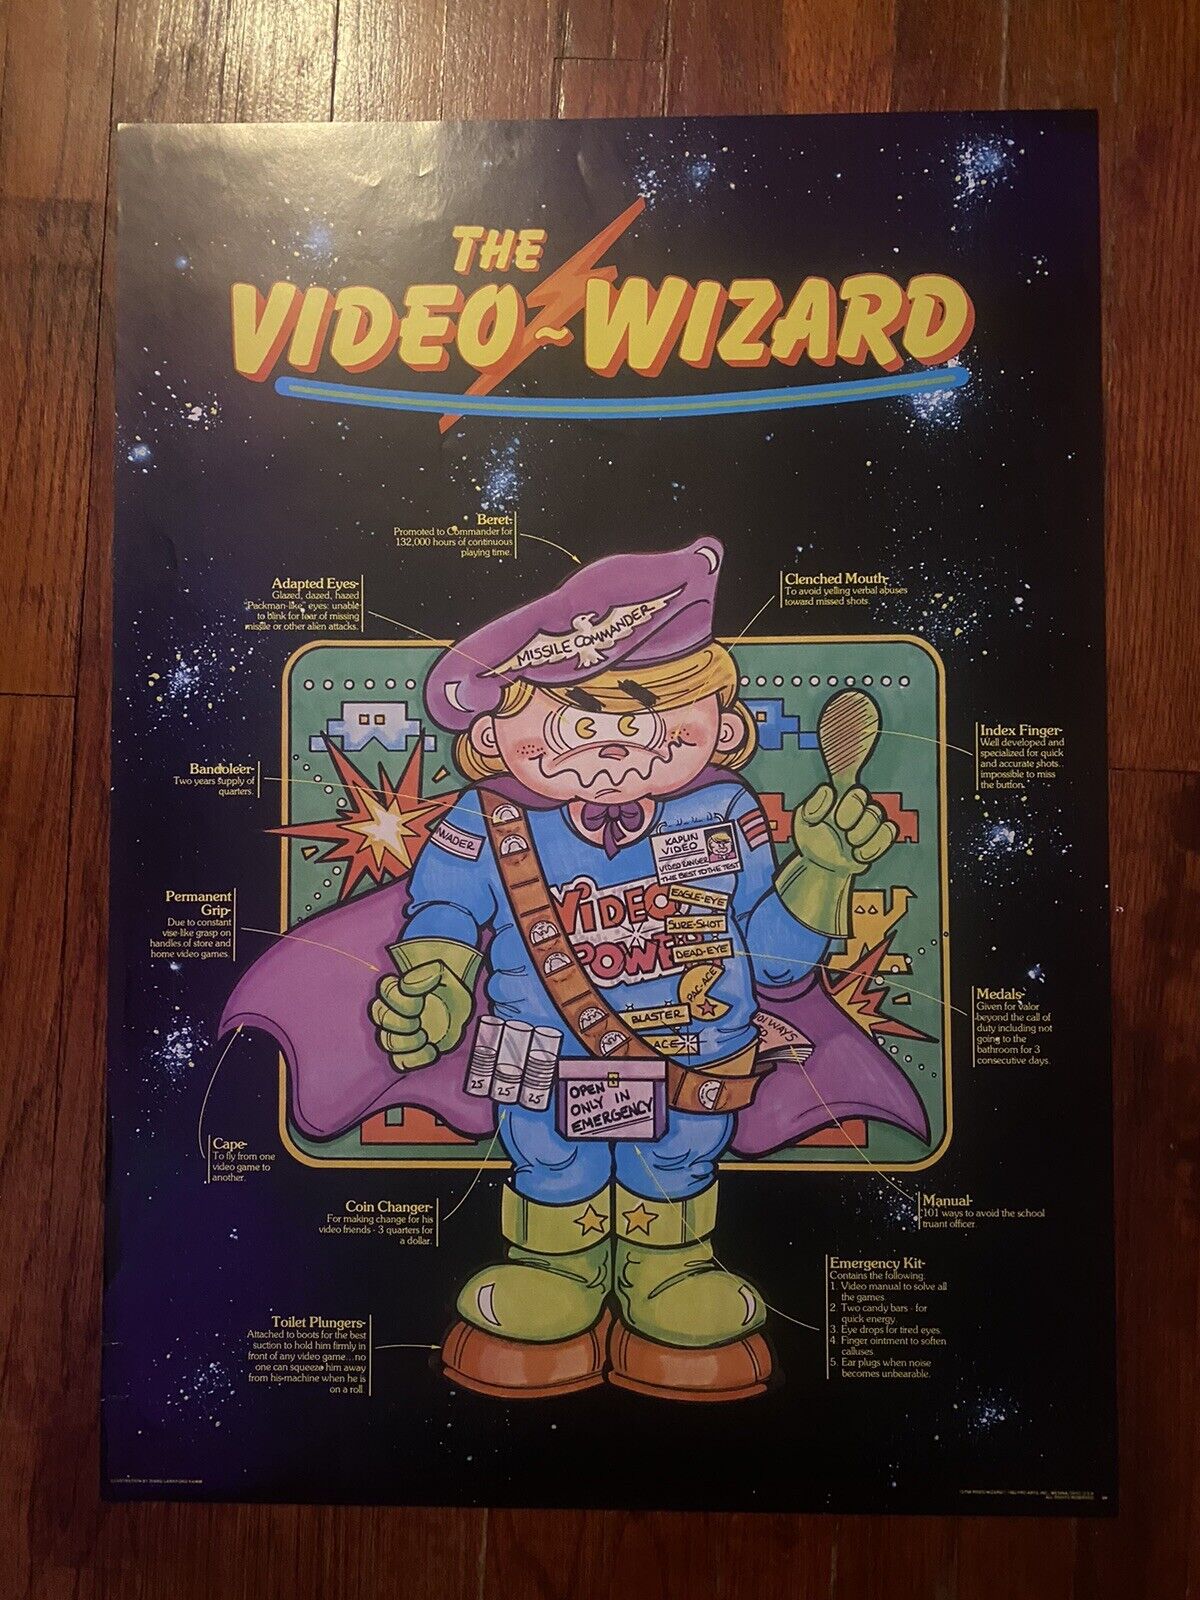 Unique 1982 Arcade Poster by Pro Arts Inc. - Rare Gaming Memorabilia